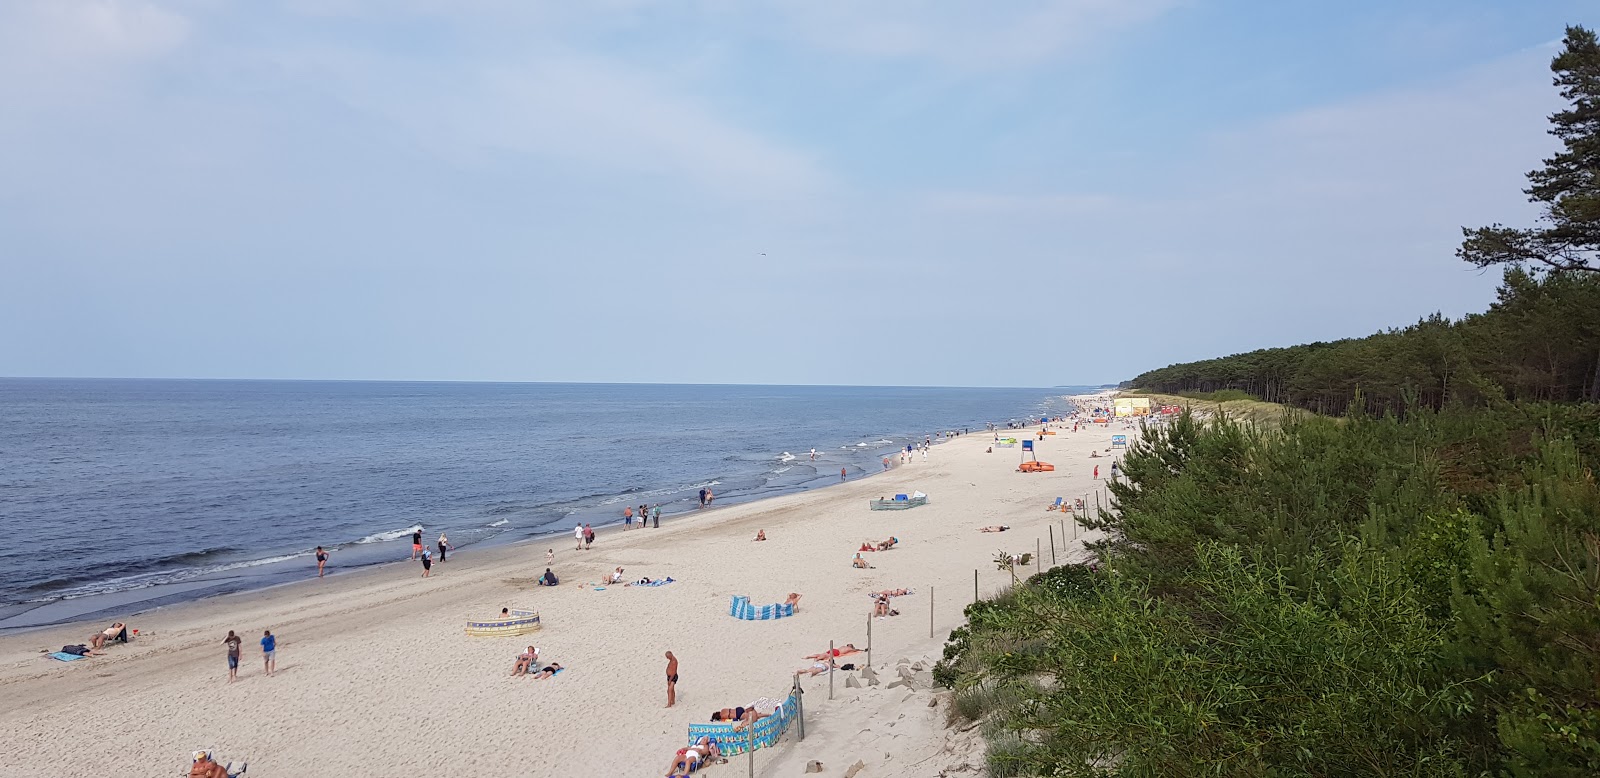 Foto av Mrzezyno Beach med ljus fin sand yta